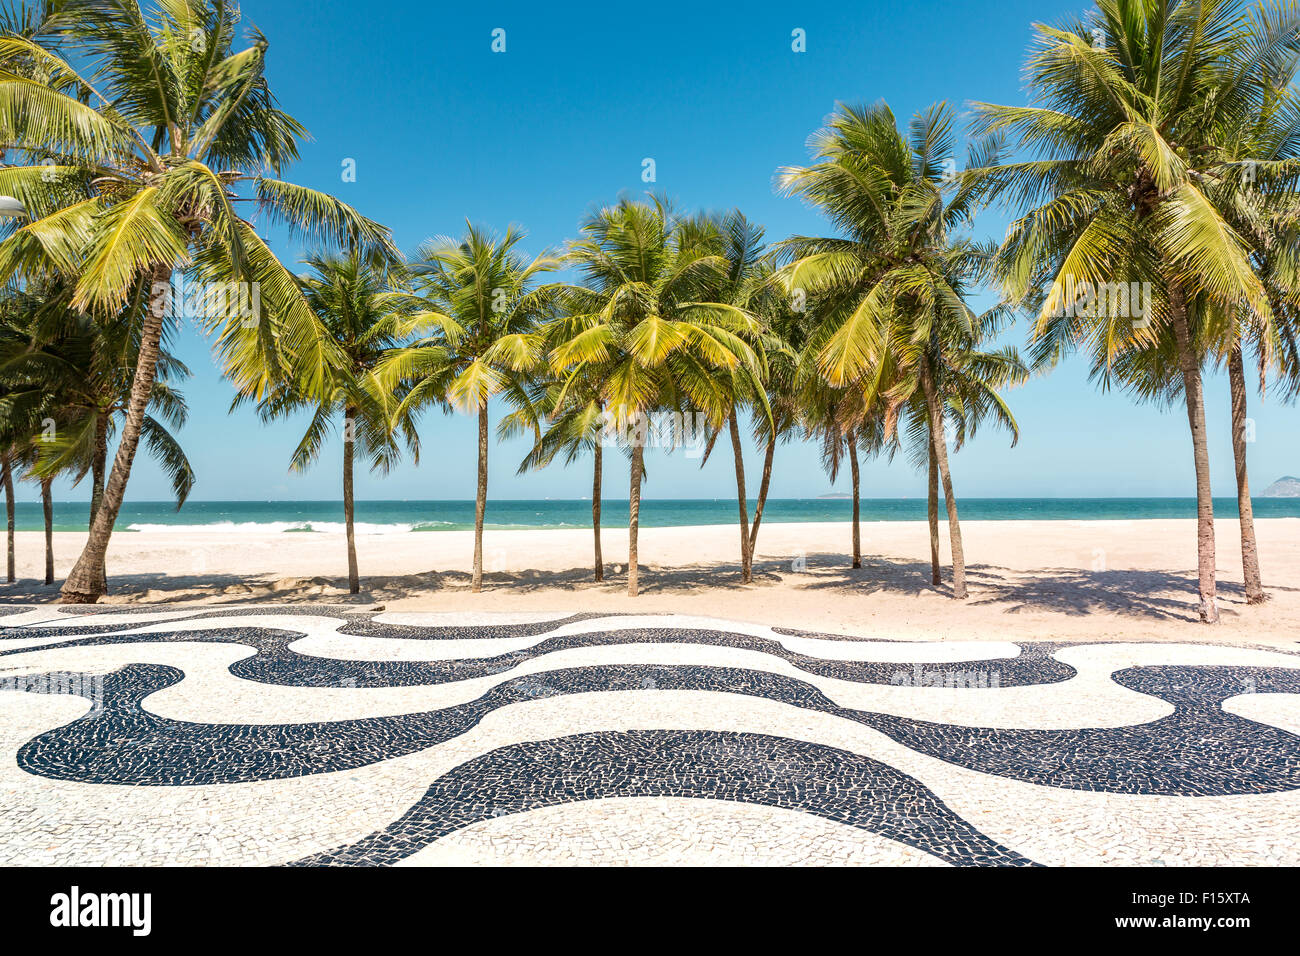 Palm trees and the iconic Copacabana beach mosaic sidewalk, in Rio de Janeiro, Brazil. Stock Photo